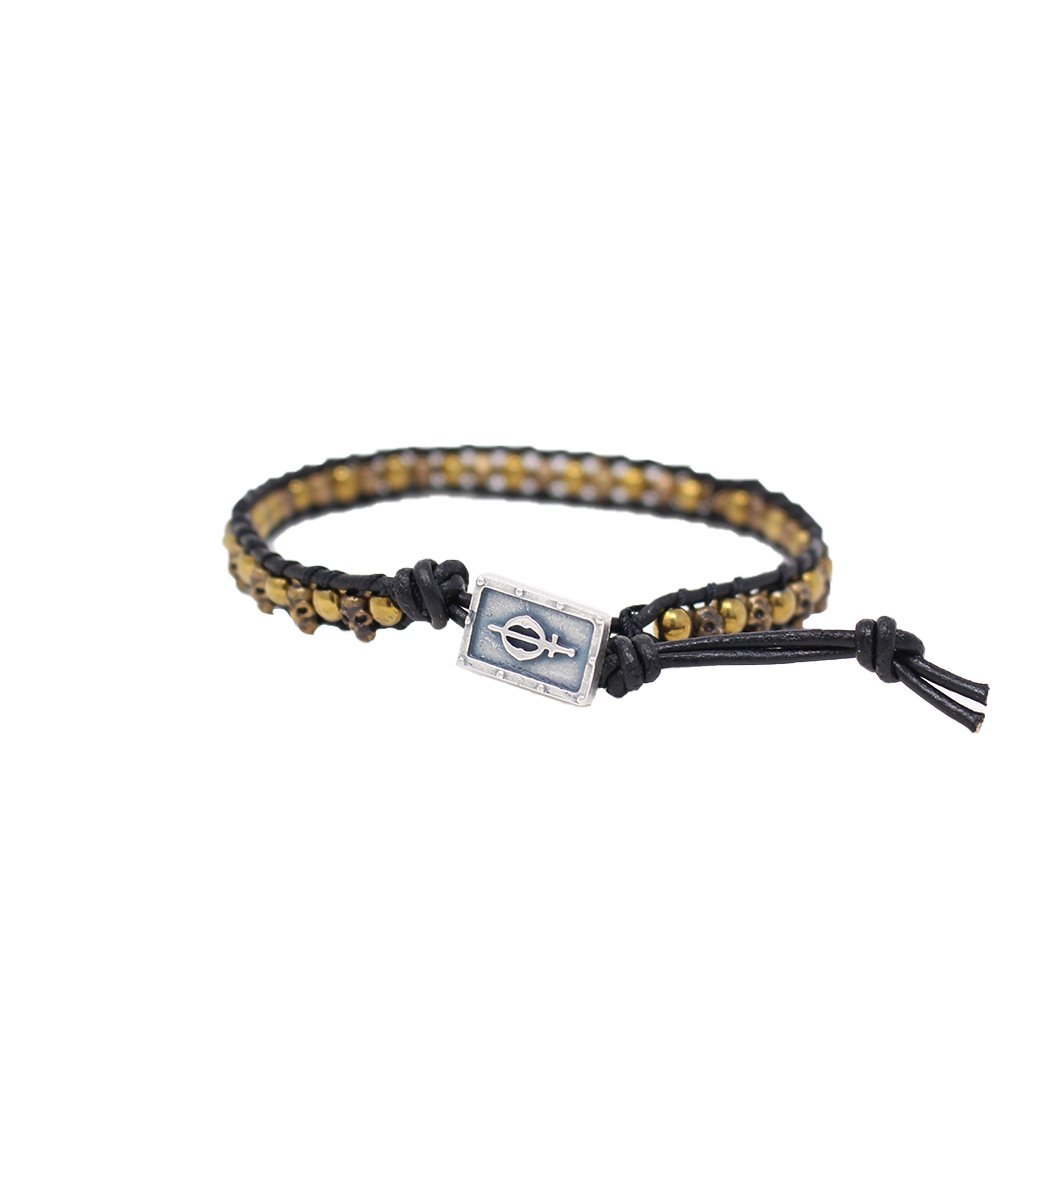 santOsaint bracelet - Laura Cantu Jewelry - Mx